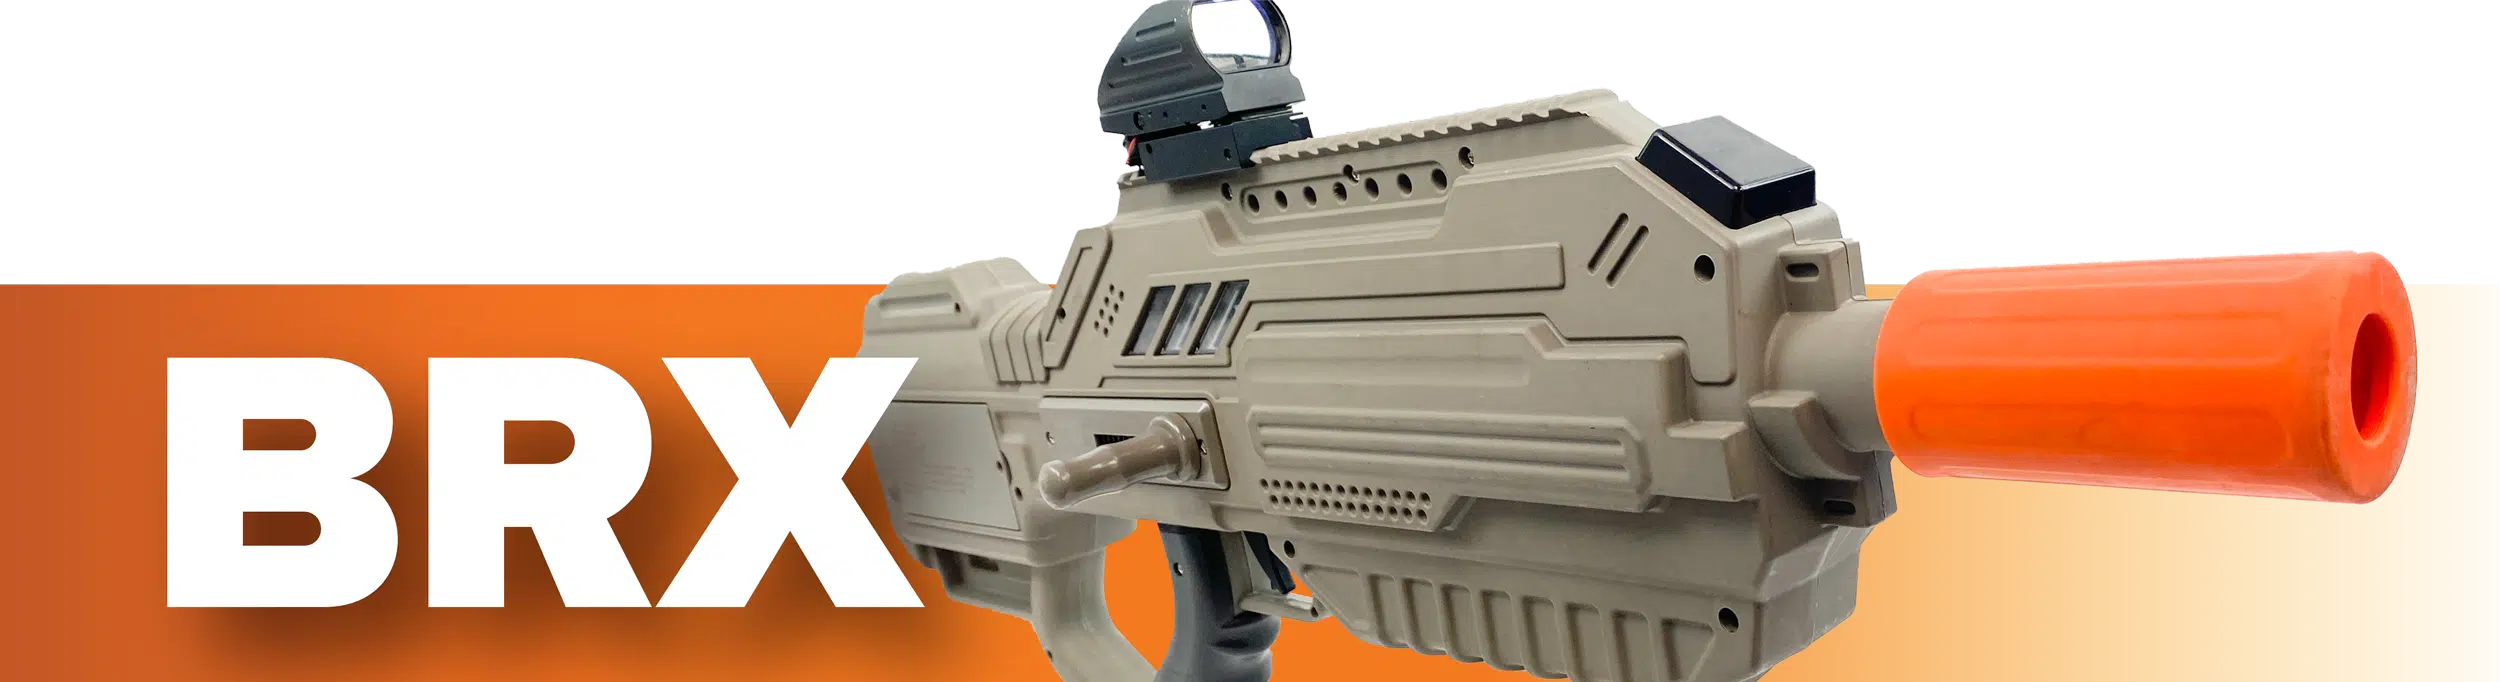 brx-laser-tag-gun